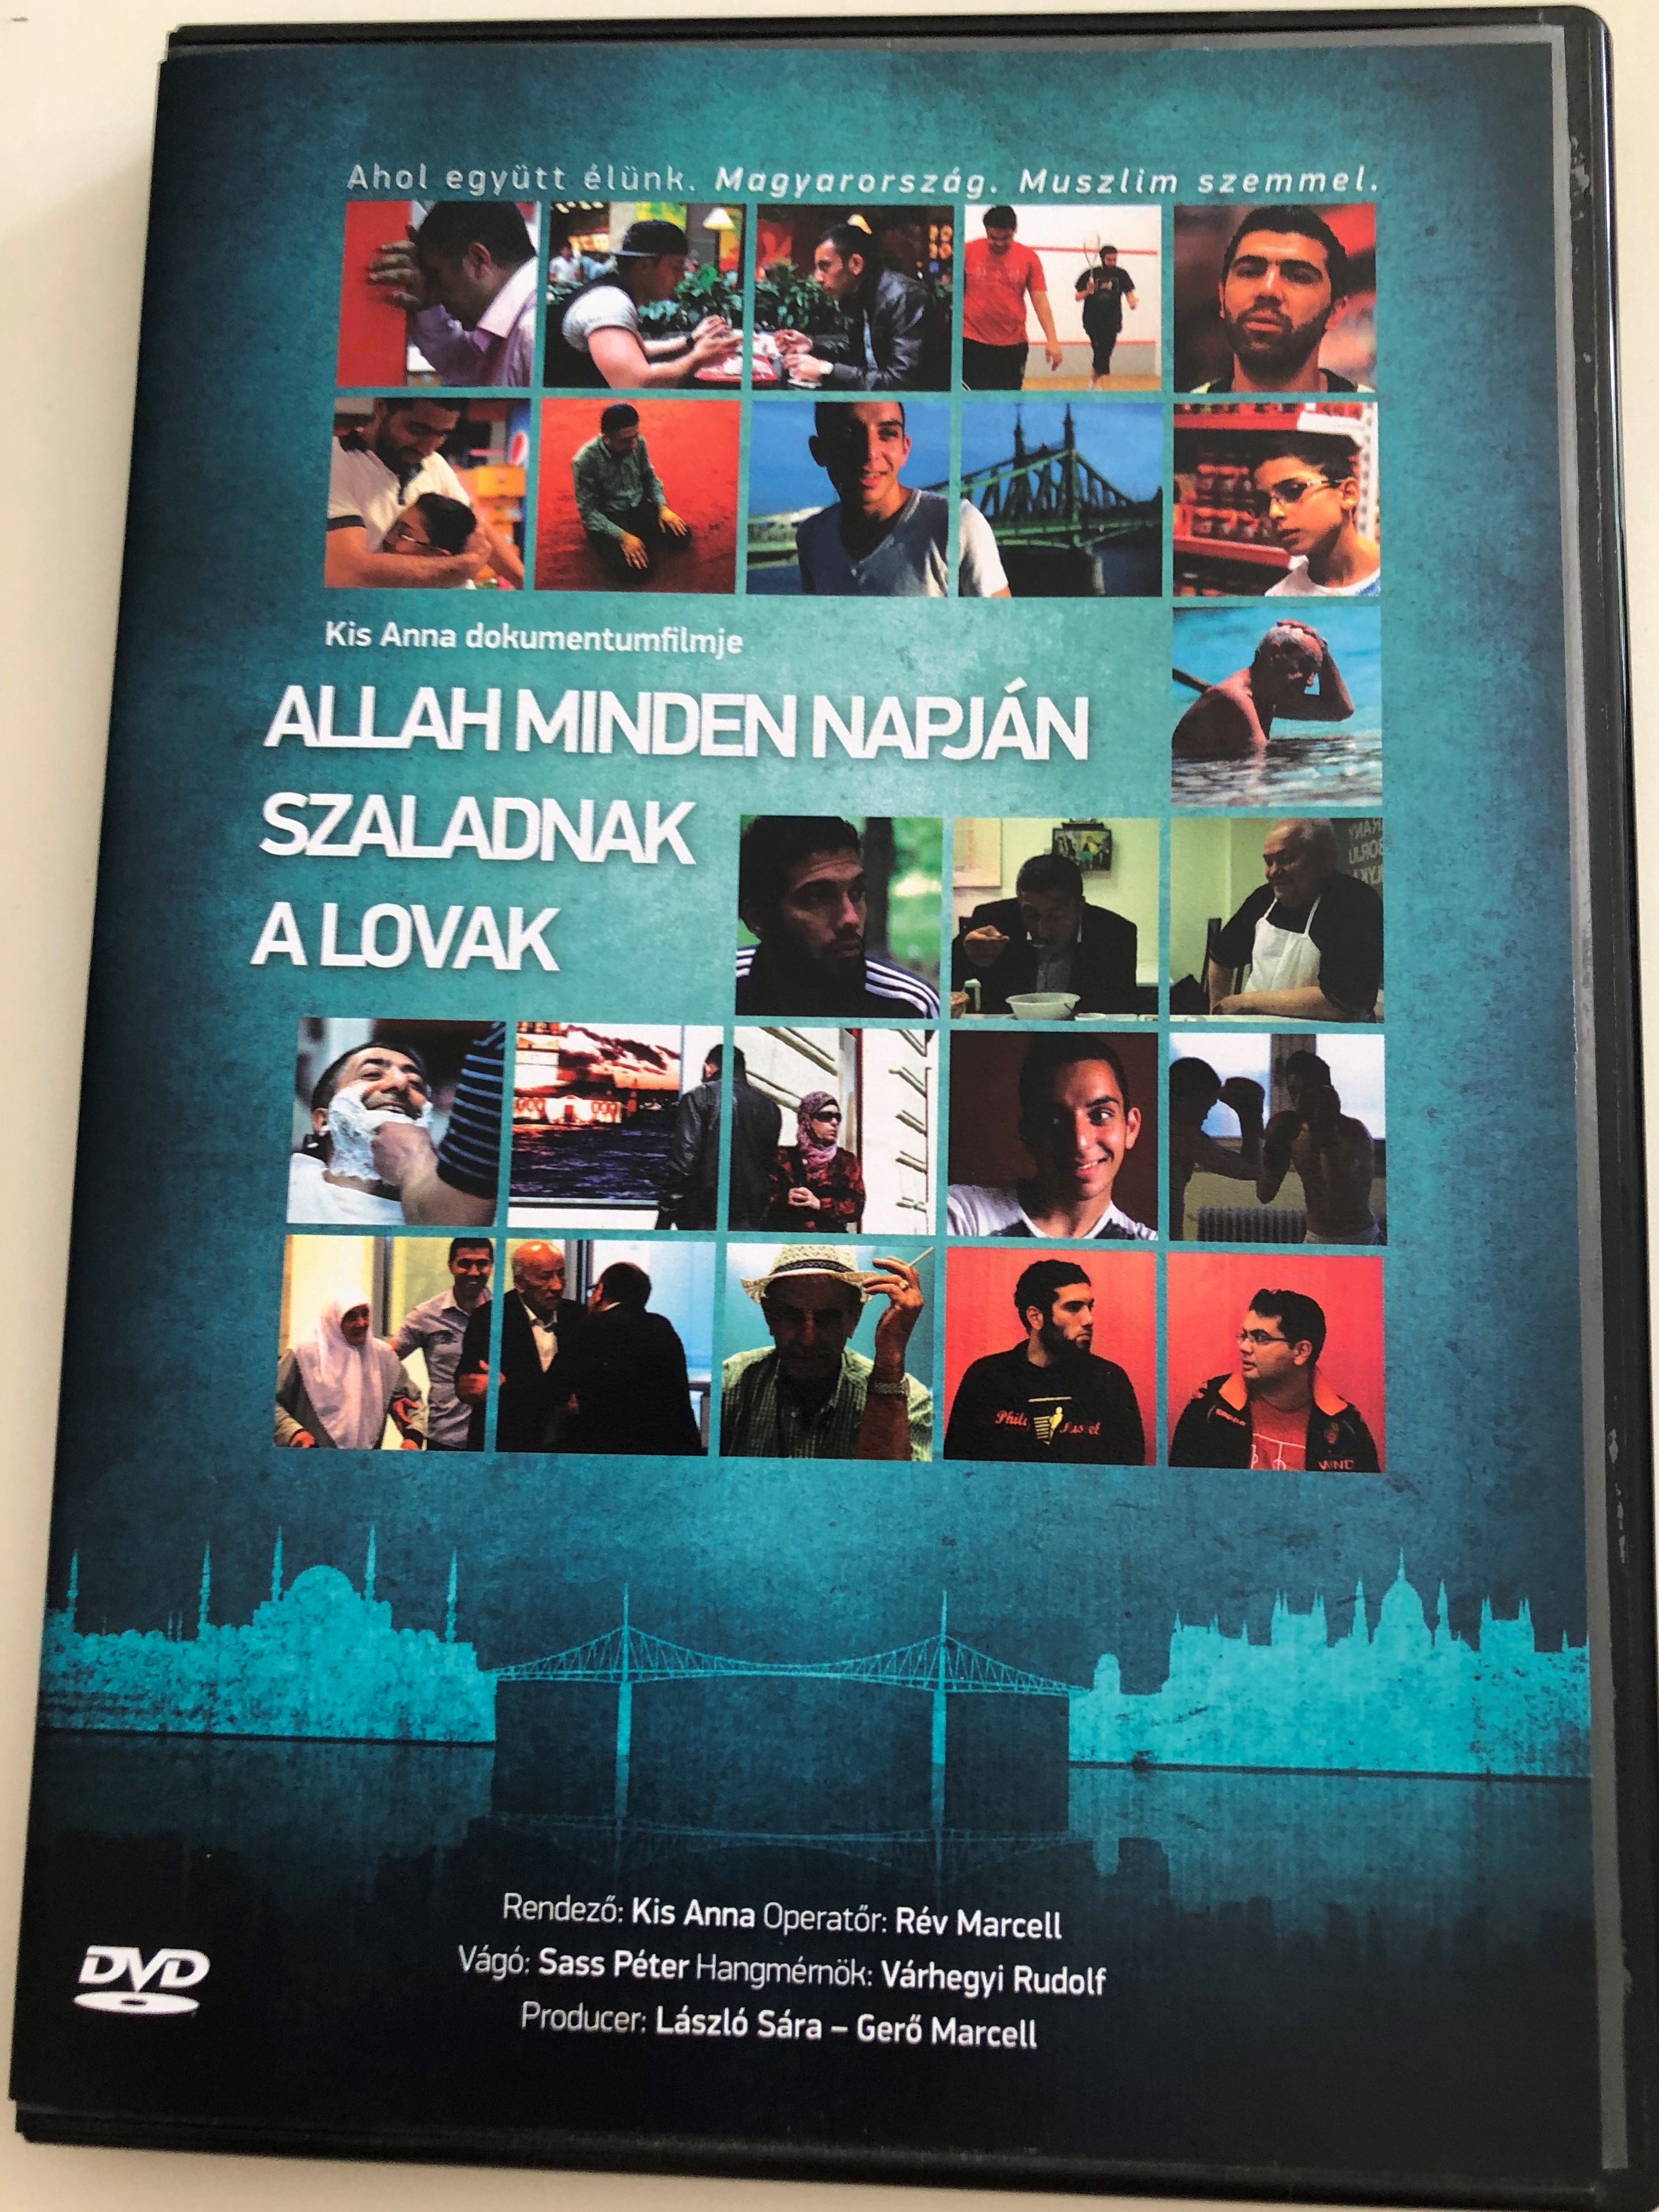 allah-minden-napj-n-szaladnak-a-lovak-dvd-2011-documentary-about-muslims-living-in-hungary-directed-by-kis-anna-muszlim-szemmel-campfilm-1-.jpg